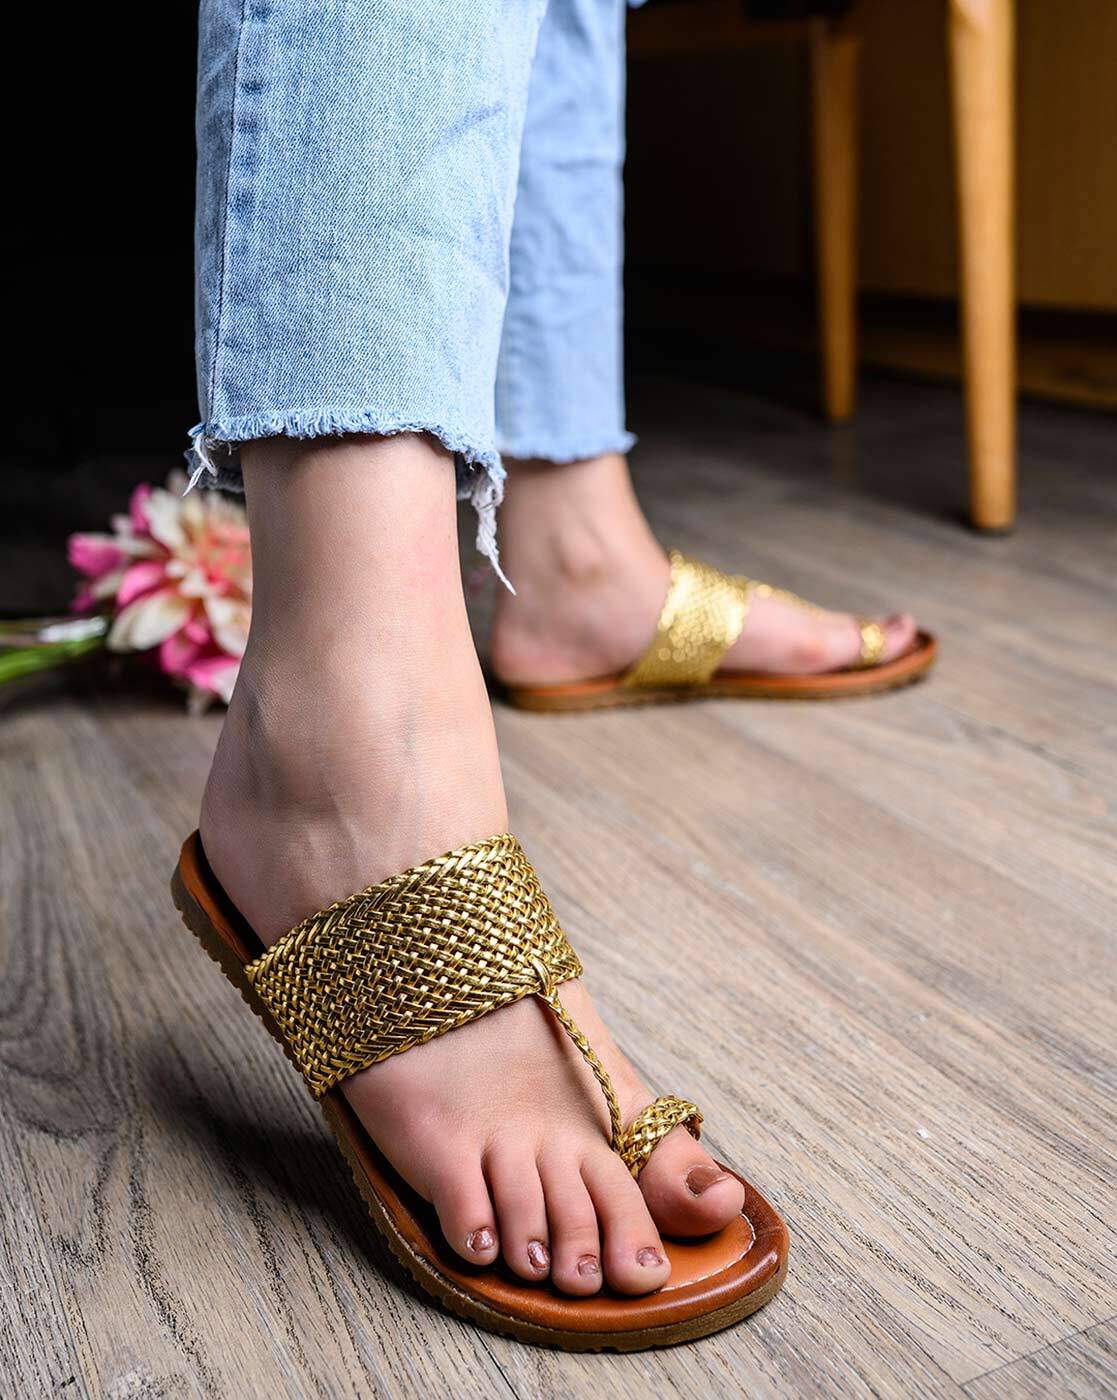 Fancy Sandals for Women | Ladies Sandals Online in india | Fizzy Goblet